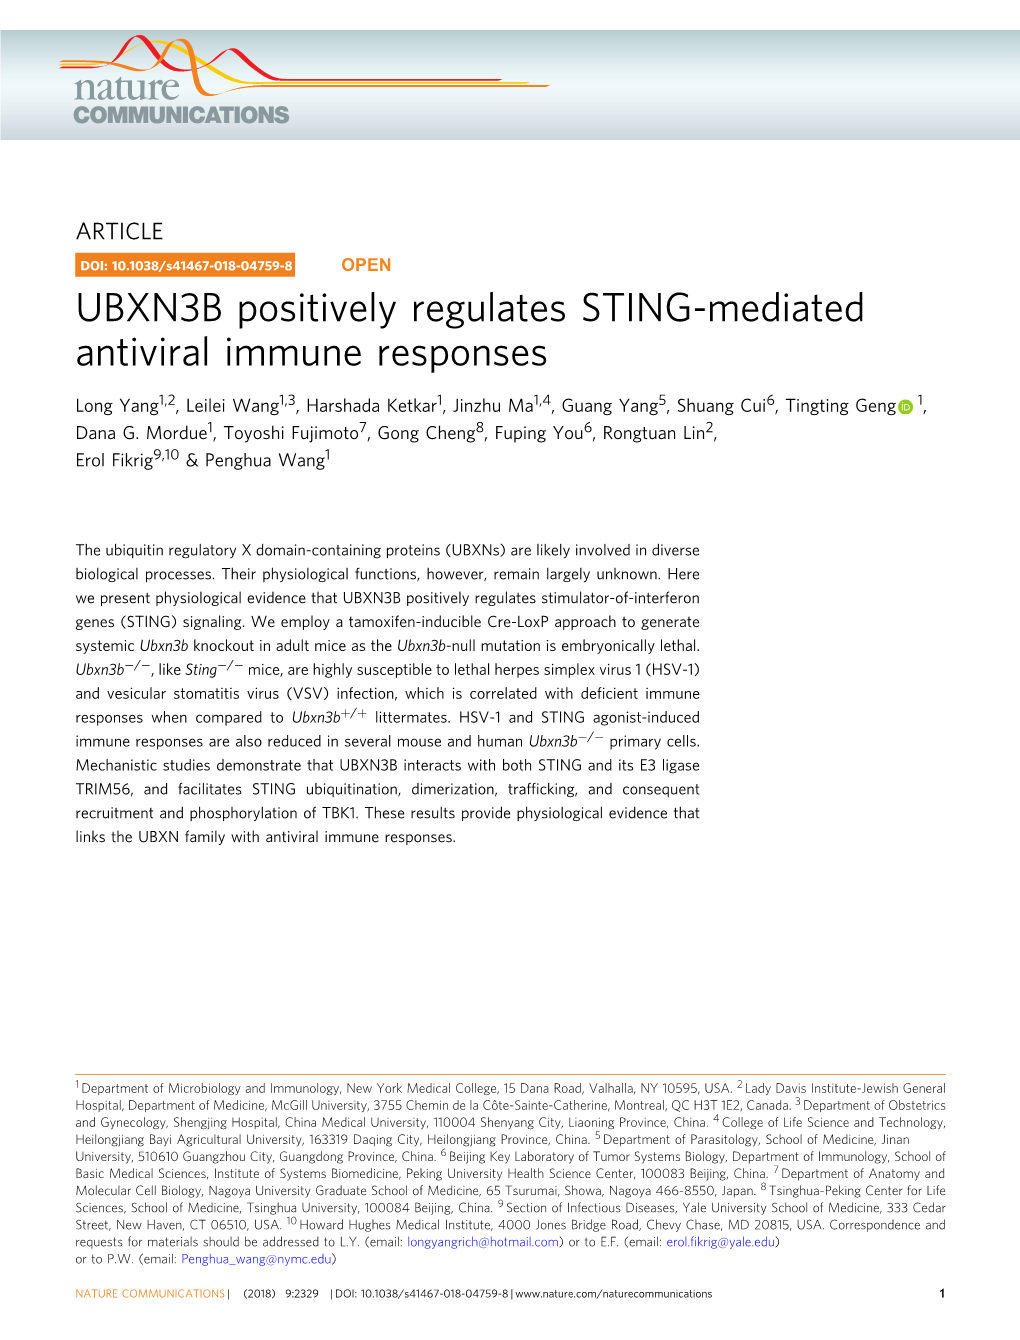 UBXN3B Positively Regulates STING-Mediated Antiviral Immune Responses